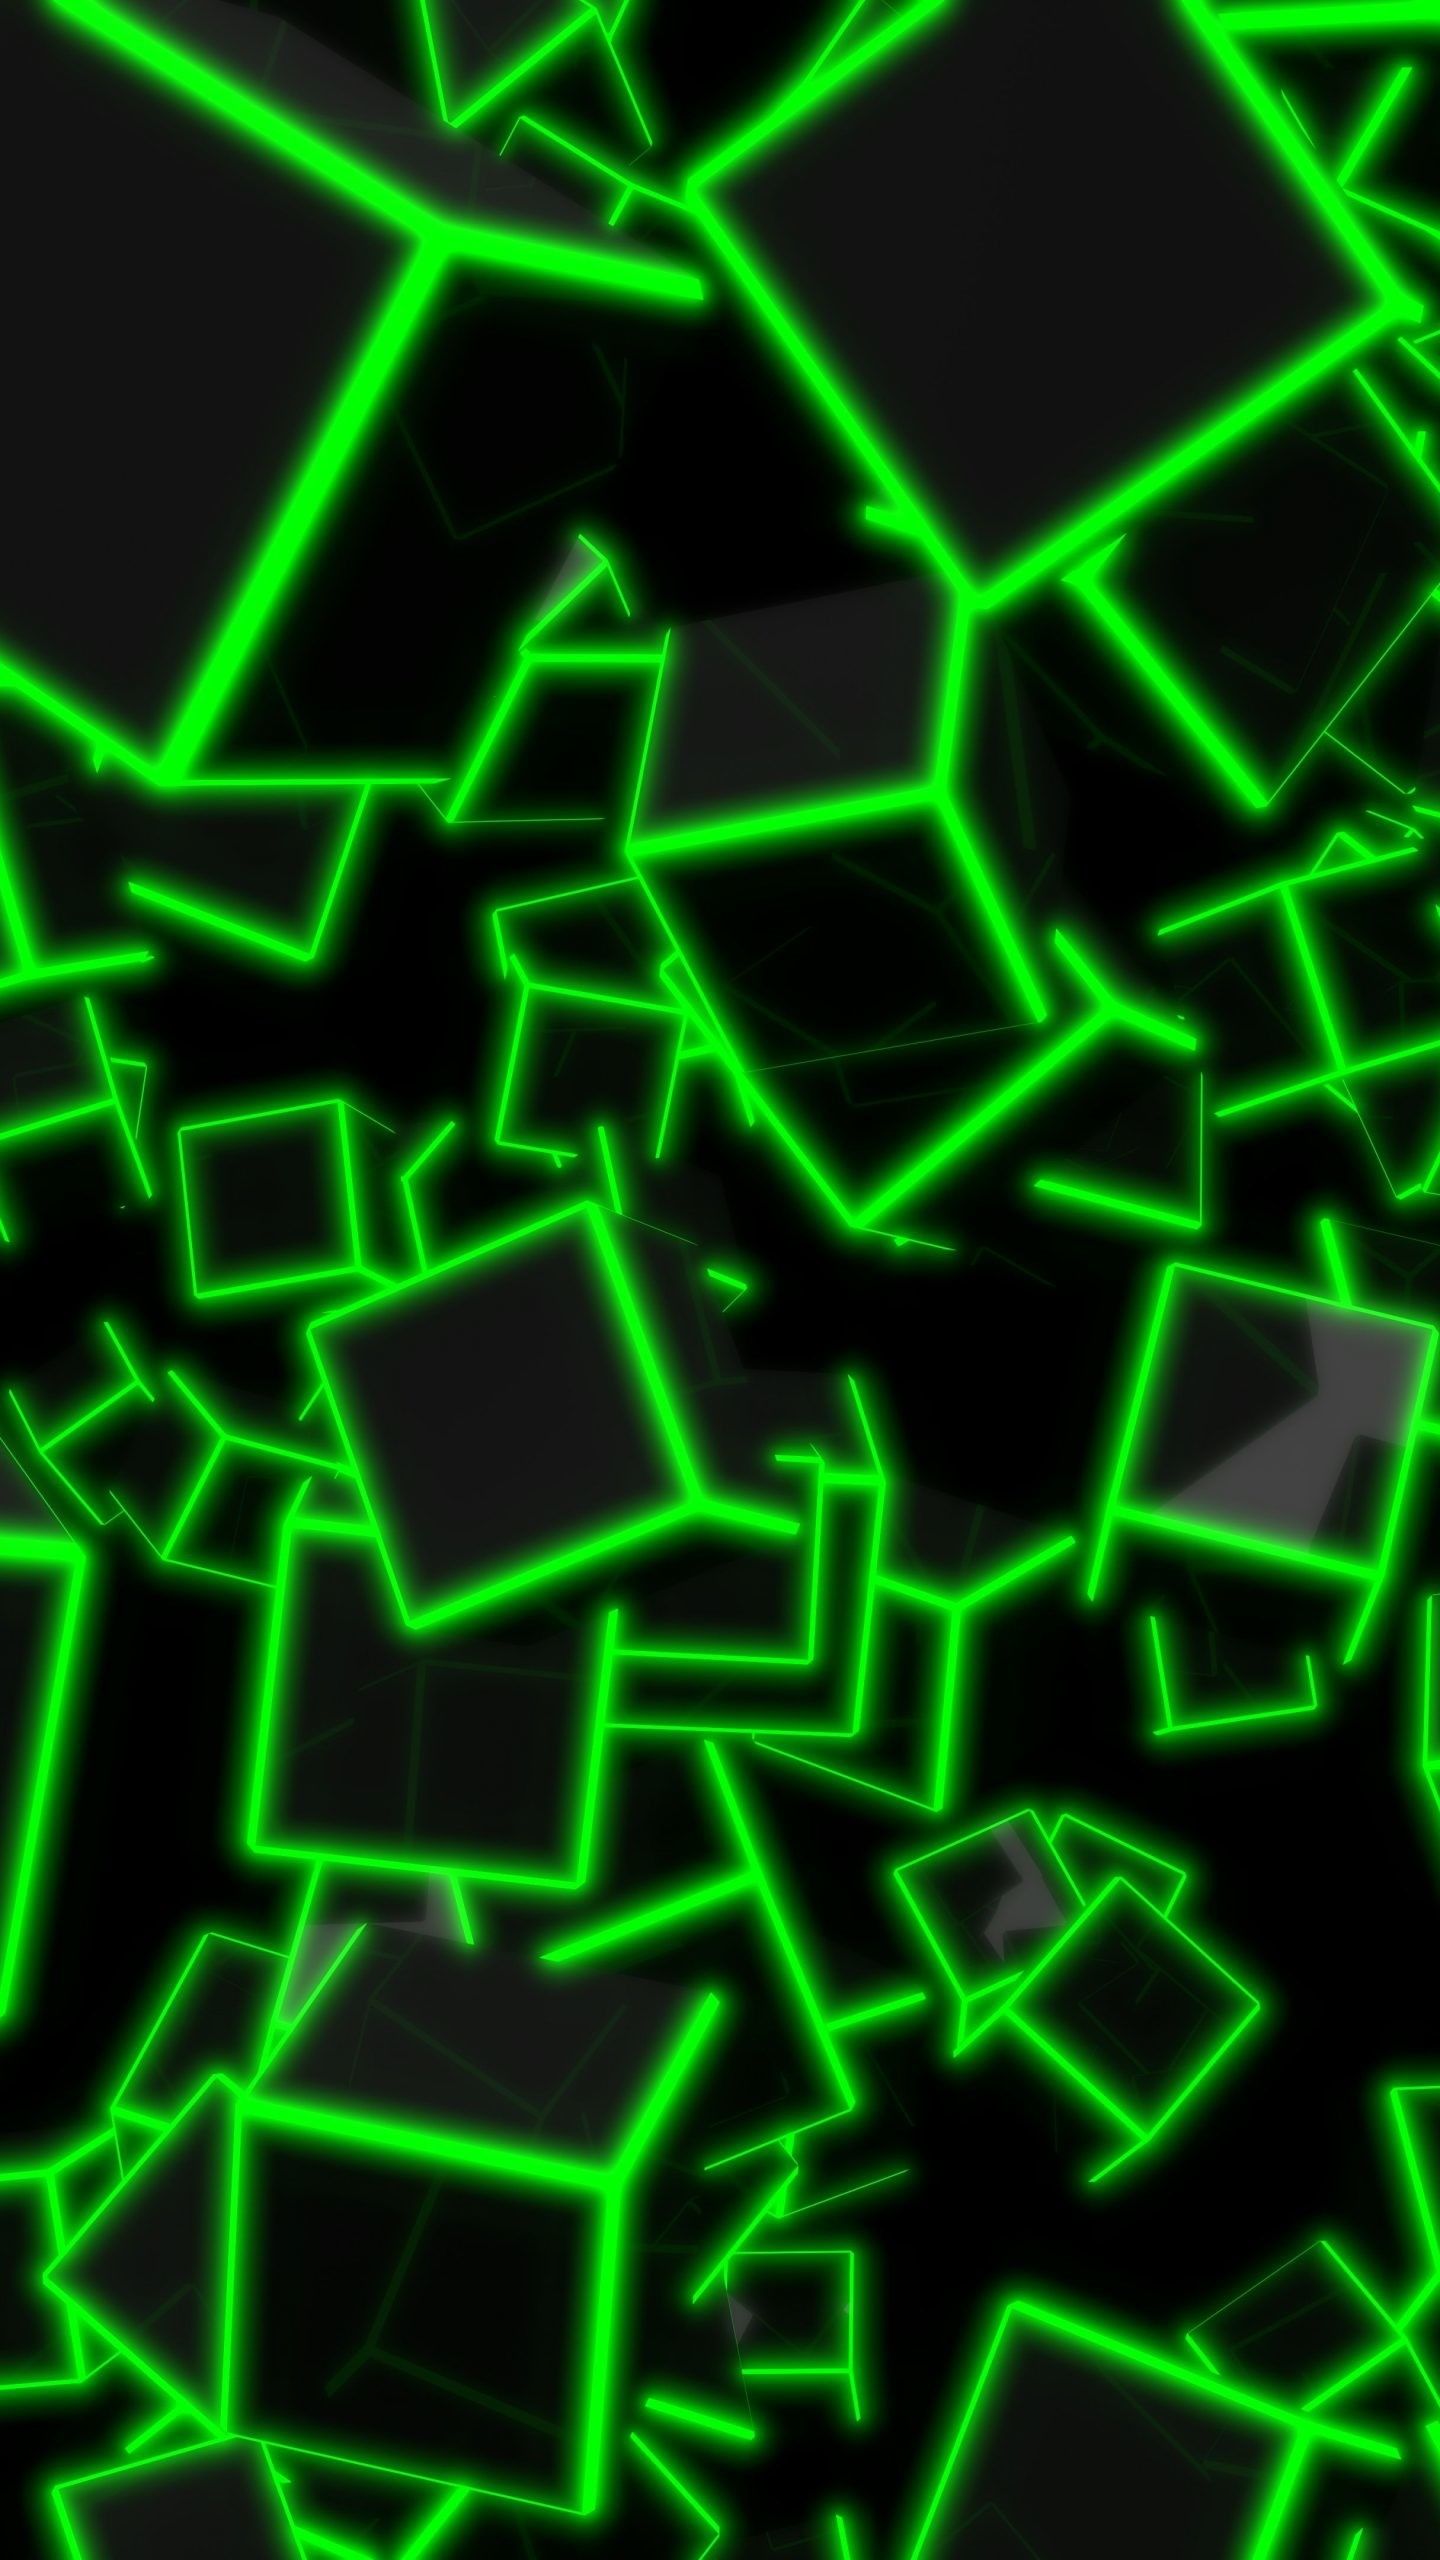 Download wallpaper 800x1200 cactus neon dark green iphone 4s4 for  parallax hd background